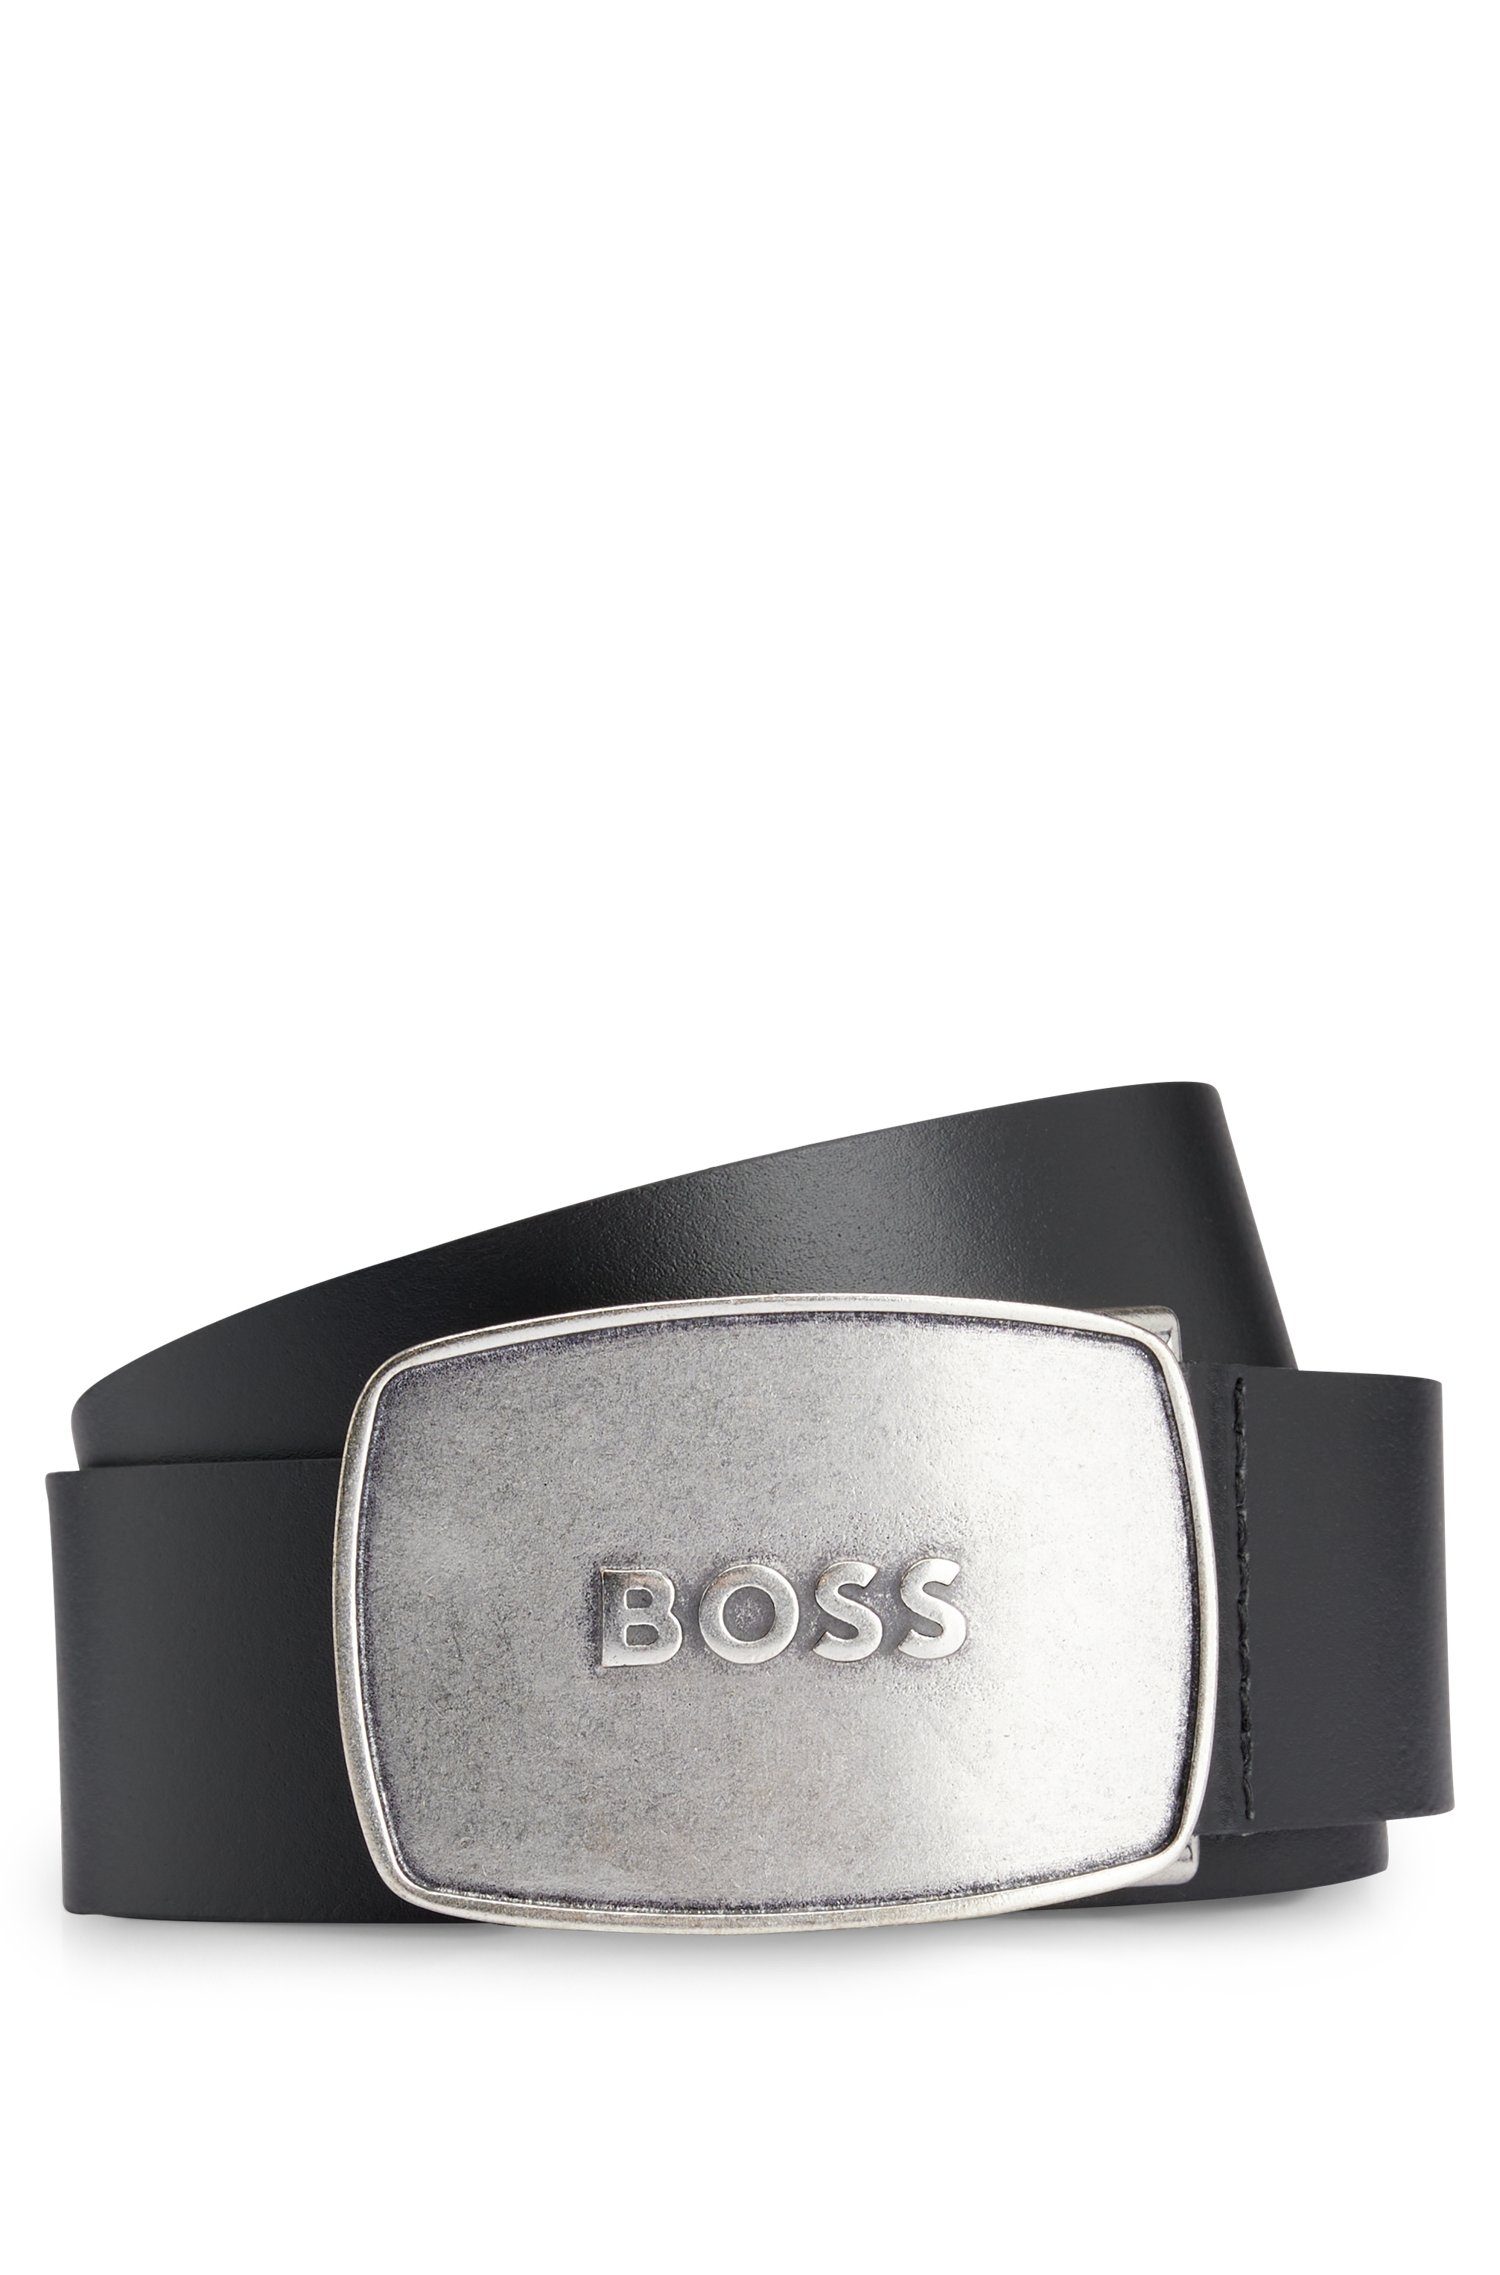 Metall mit BOSS Boss_Icon-EP_Sz40 auffälliger Ledergürtel Logo-Schnalle aus